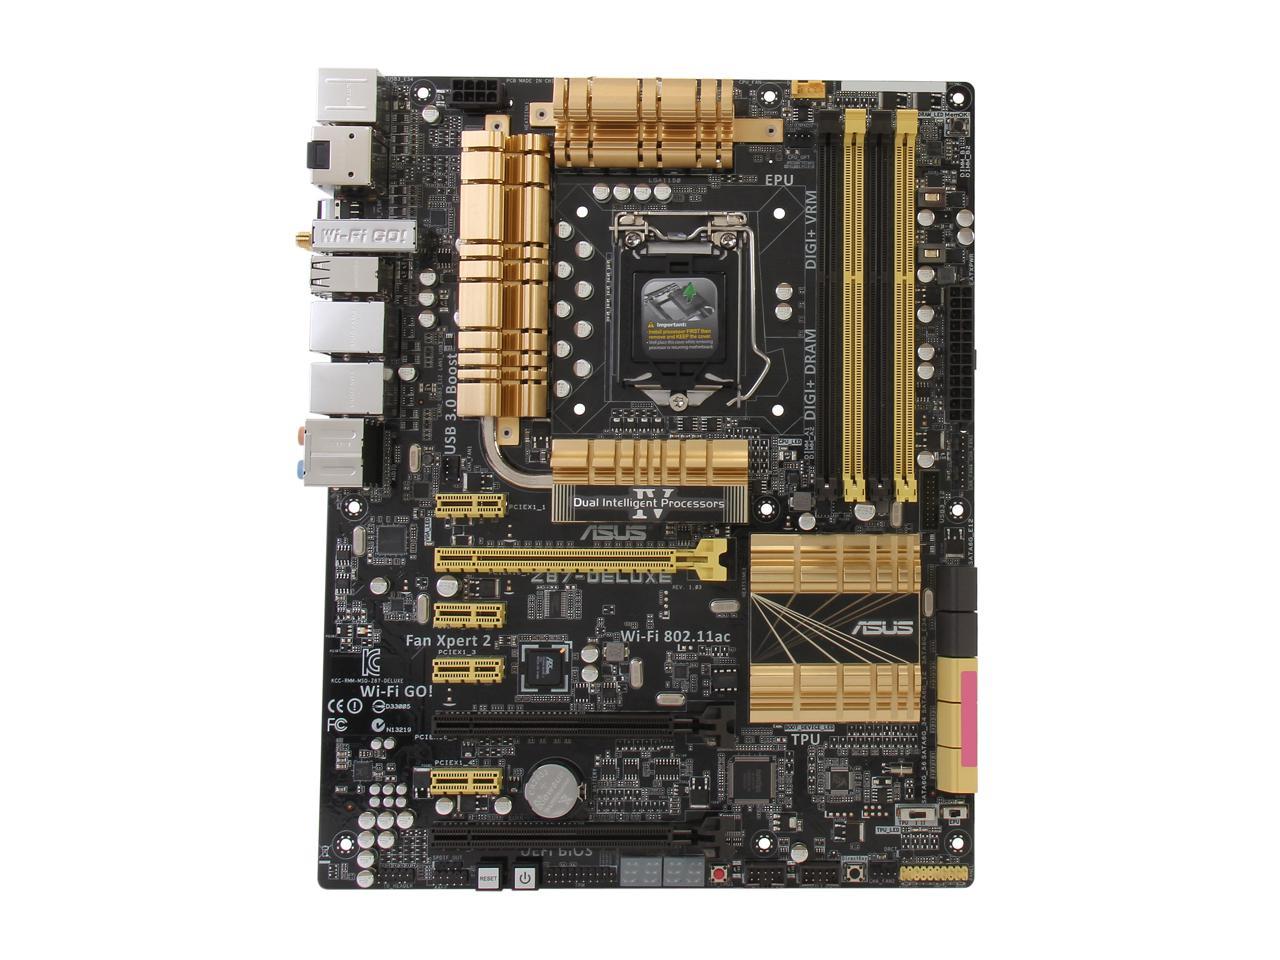 ASUS Z87-DELUXE LGA 1150 Intel Z87 HDMI SATA 6Gb/s USB 3.0 ATX Intel Motherboard